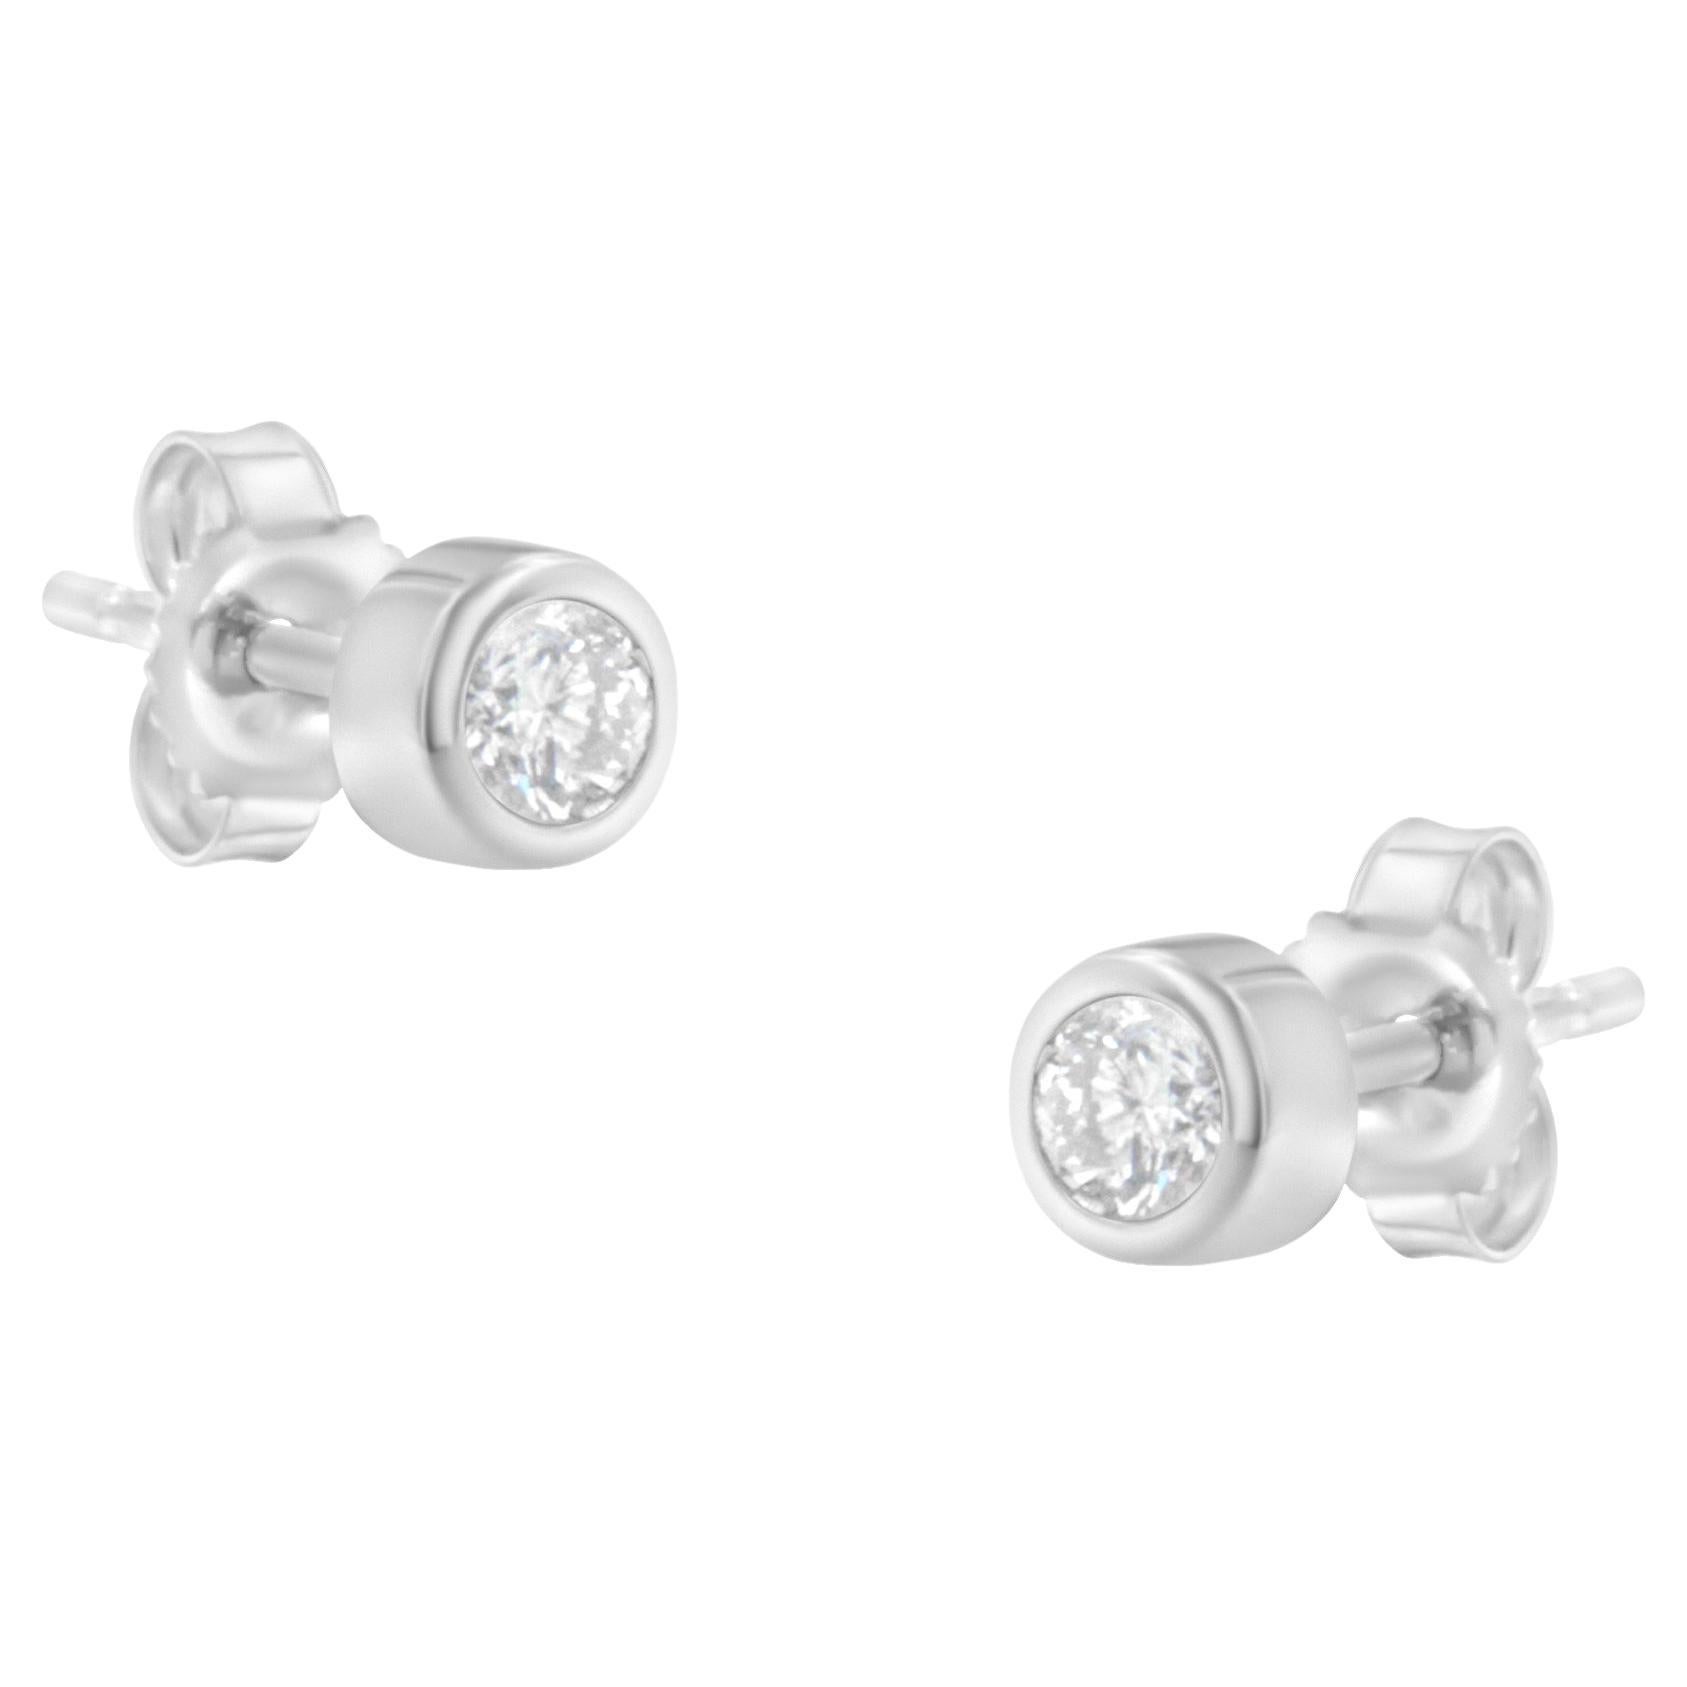 10K White Gold 1/5 Carat Round-Cut Near Colorless Diamond Stud Earrings